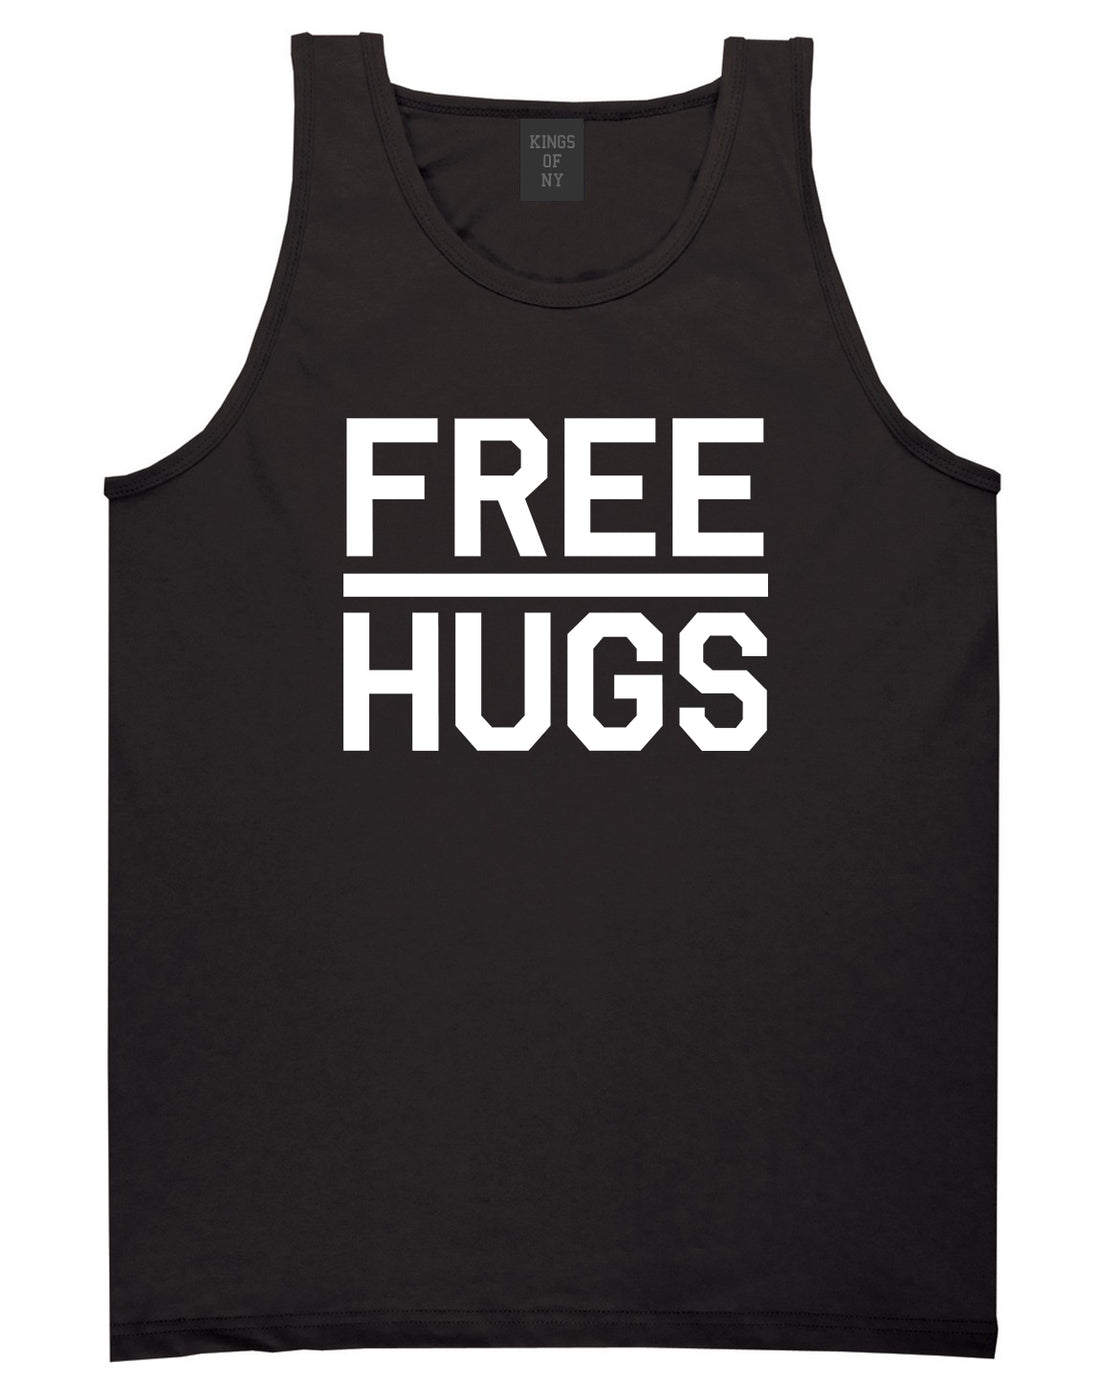 Free Hugs Funny Mens Black Tank Top Shirt by KINGS OF NY